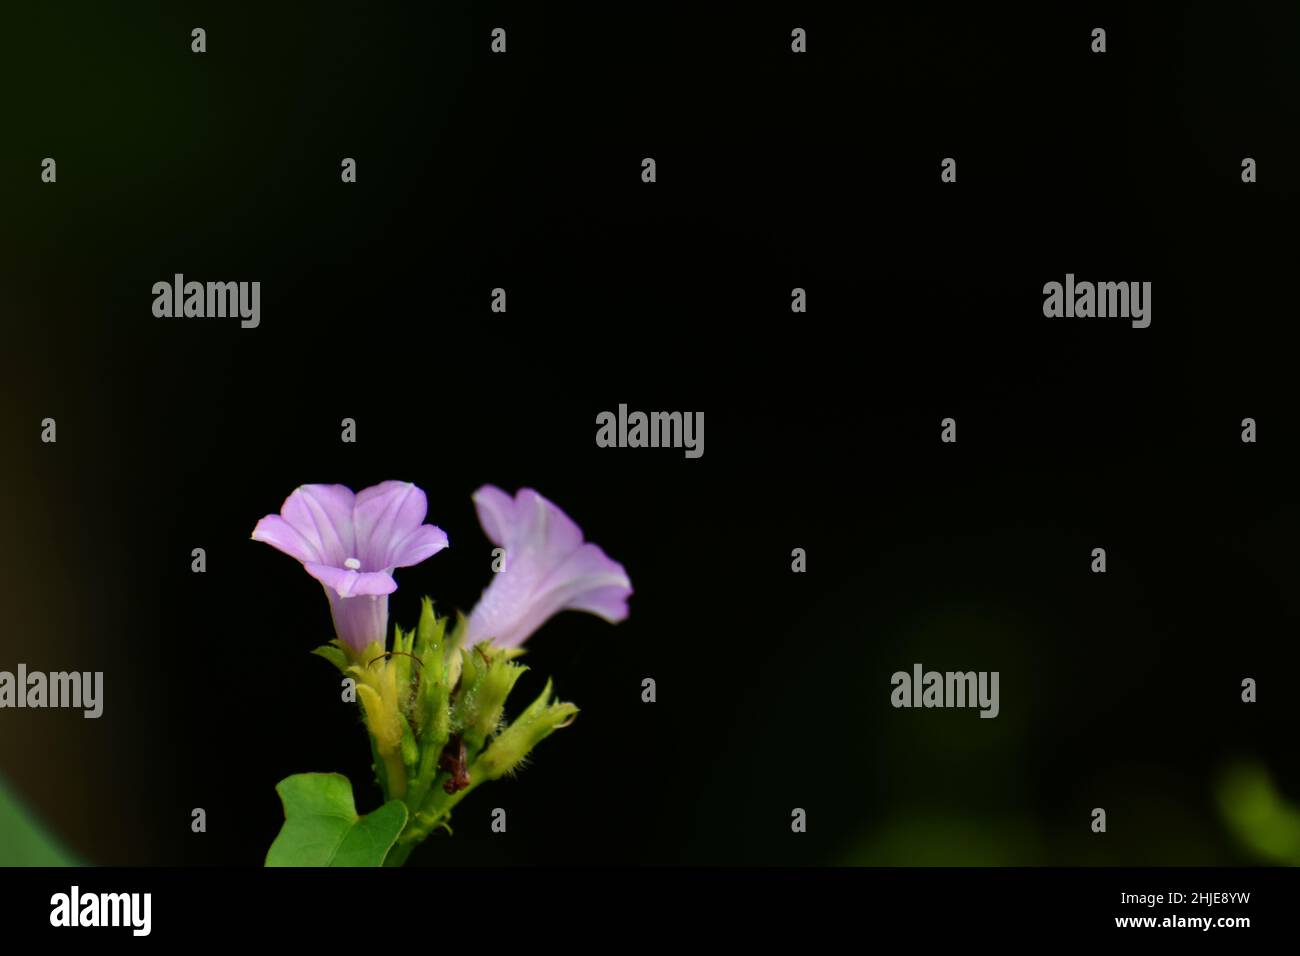 Tiny ipomoea flowers against dark background. Stock Photo